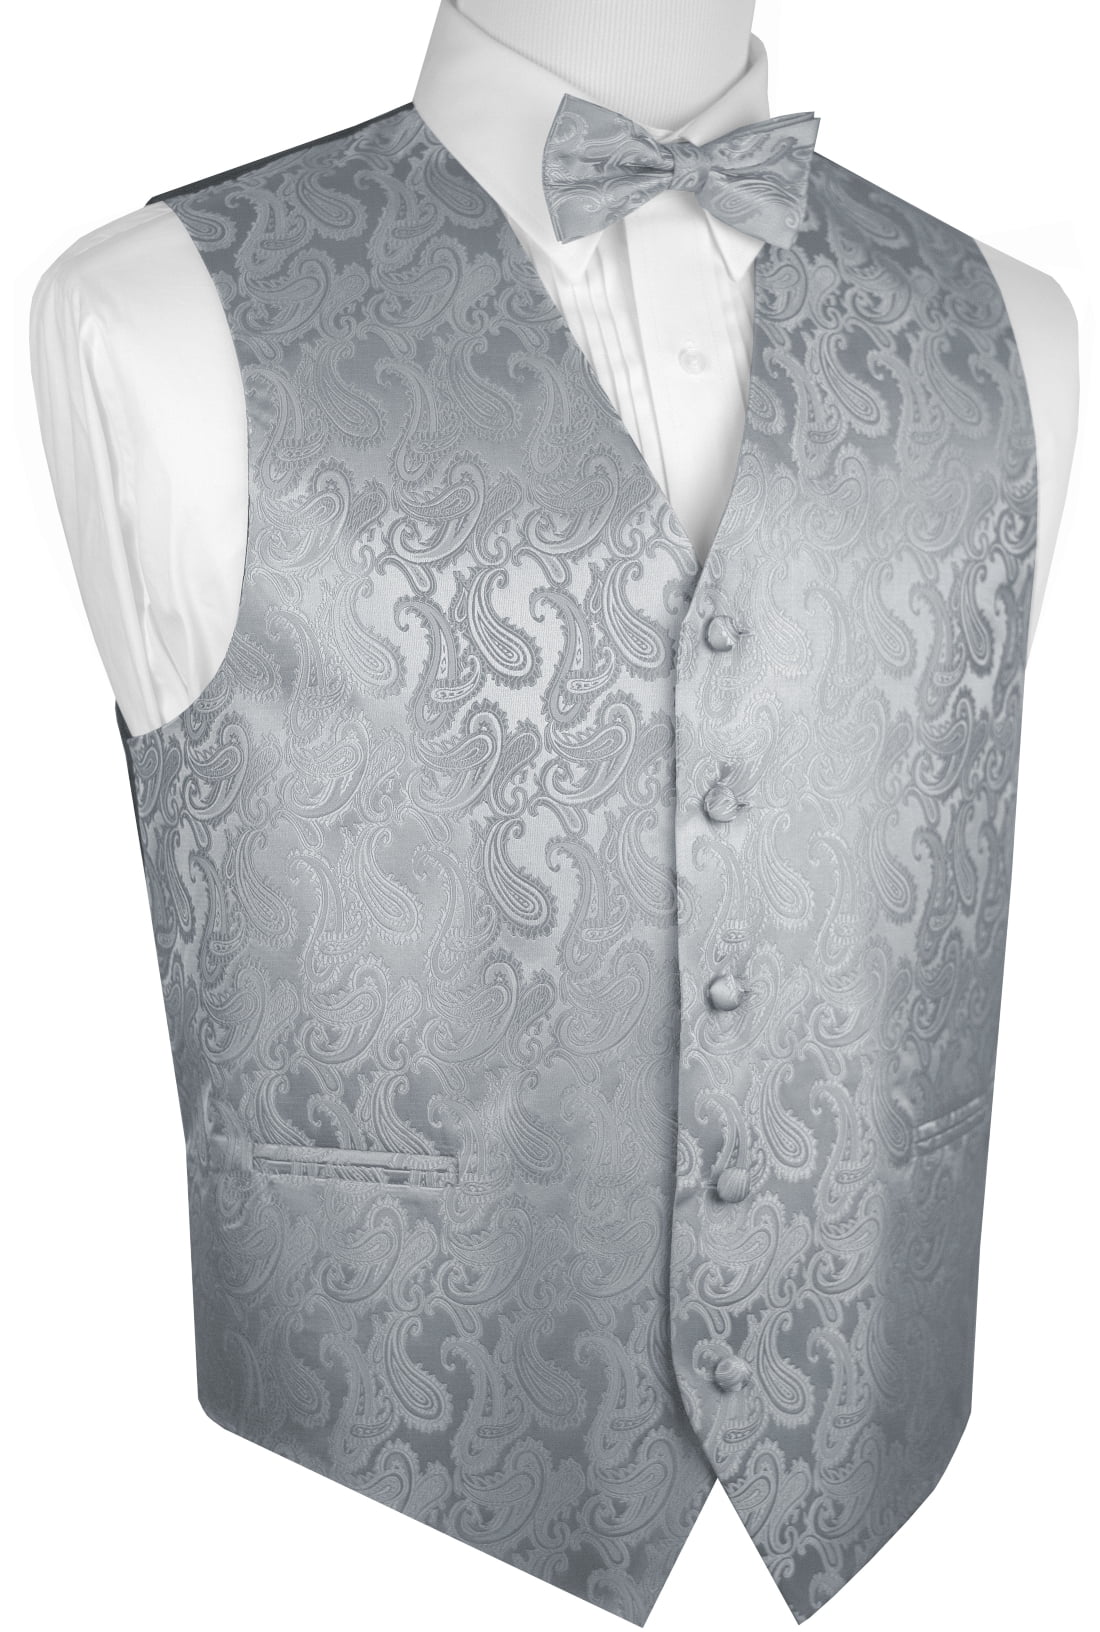 Light Platinum Silver Patterned Fullback Tuxedo Vest & Tie Wedding Vests Prom 